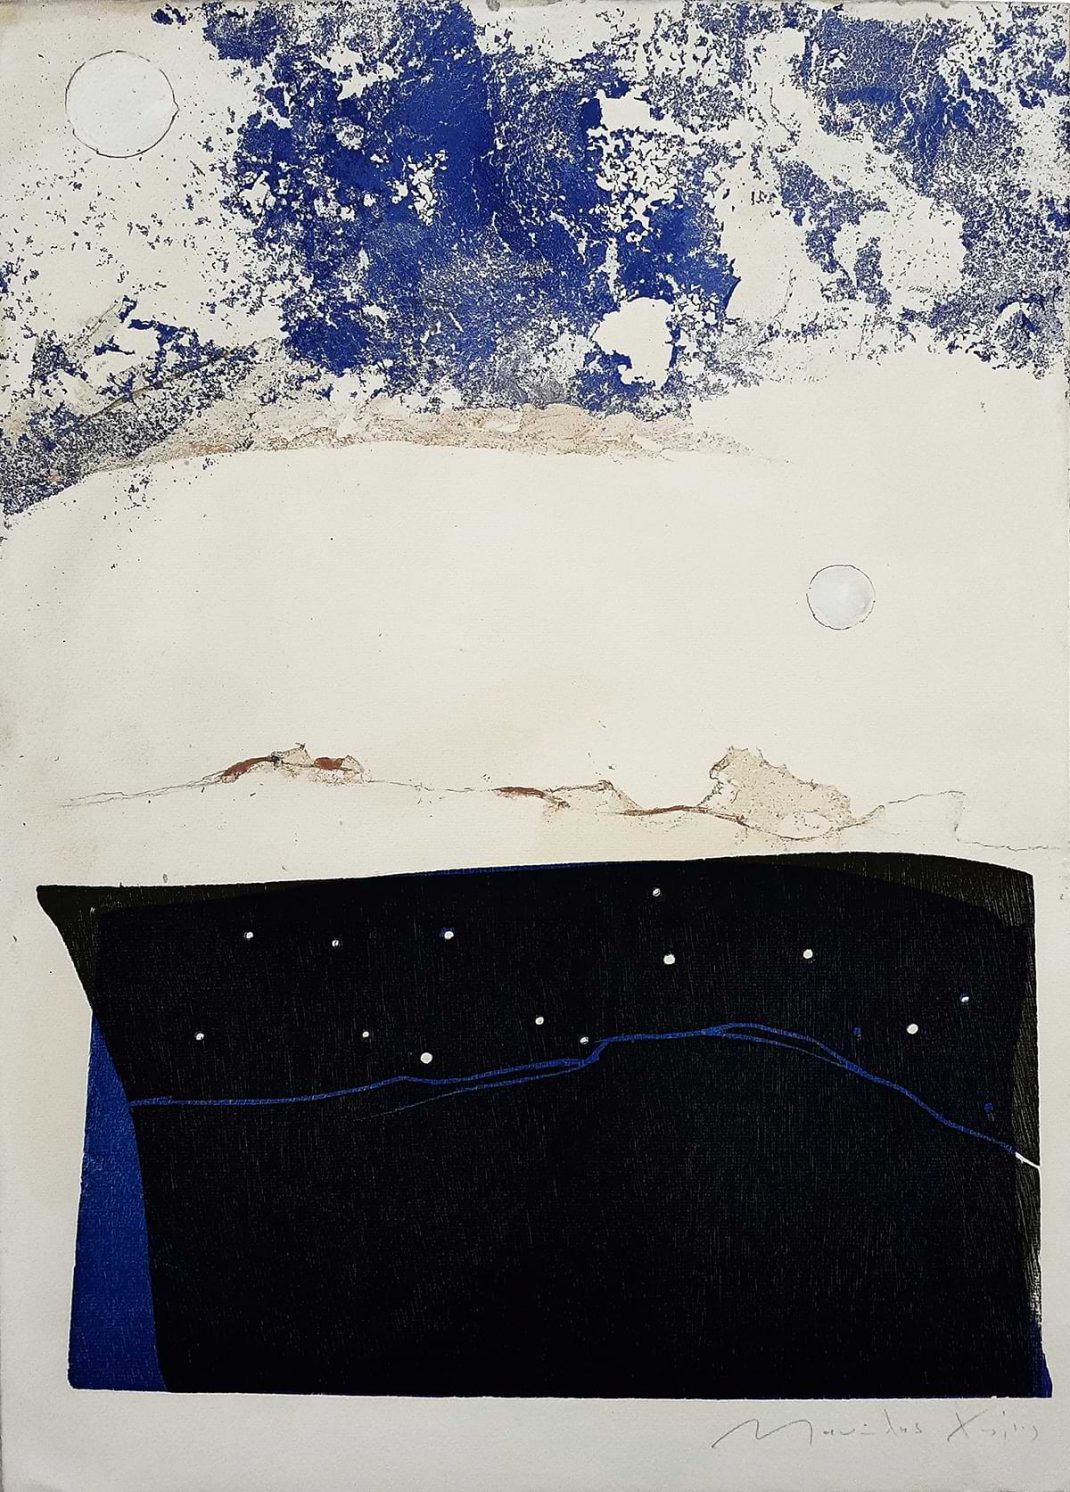 Manolis Charos.Two moons, Monoprint